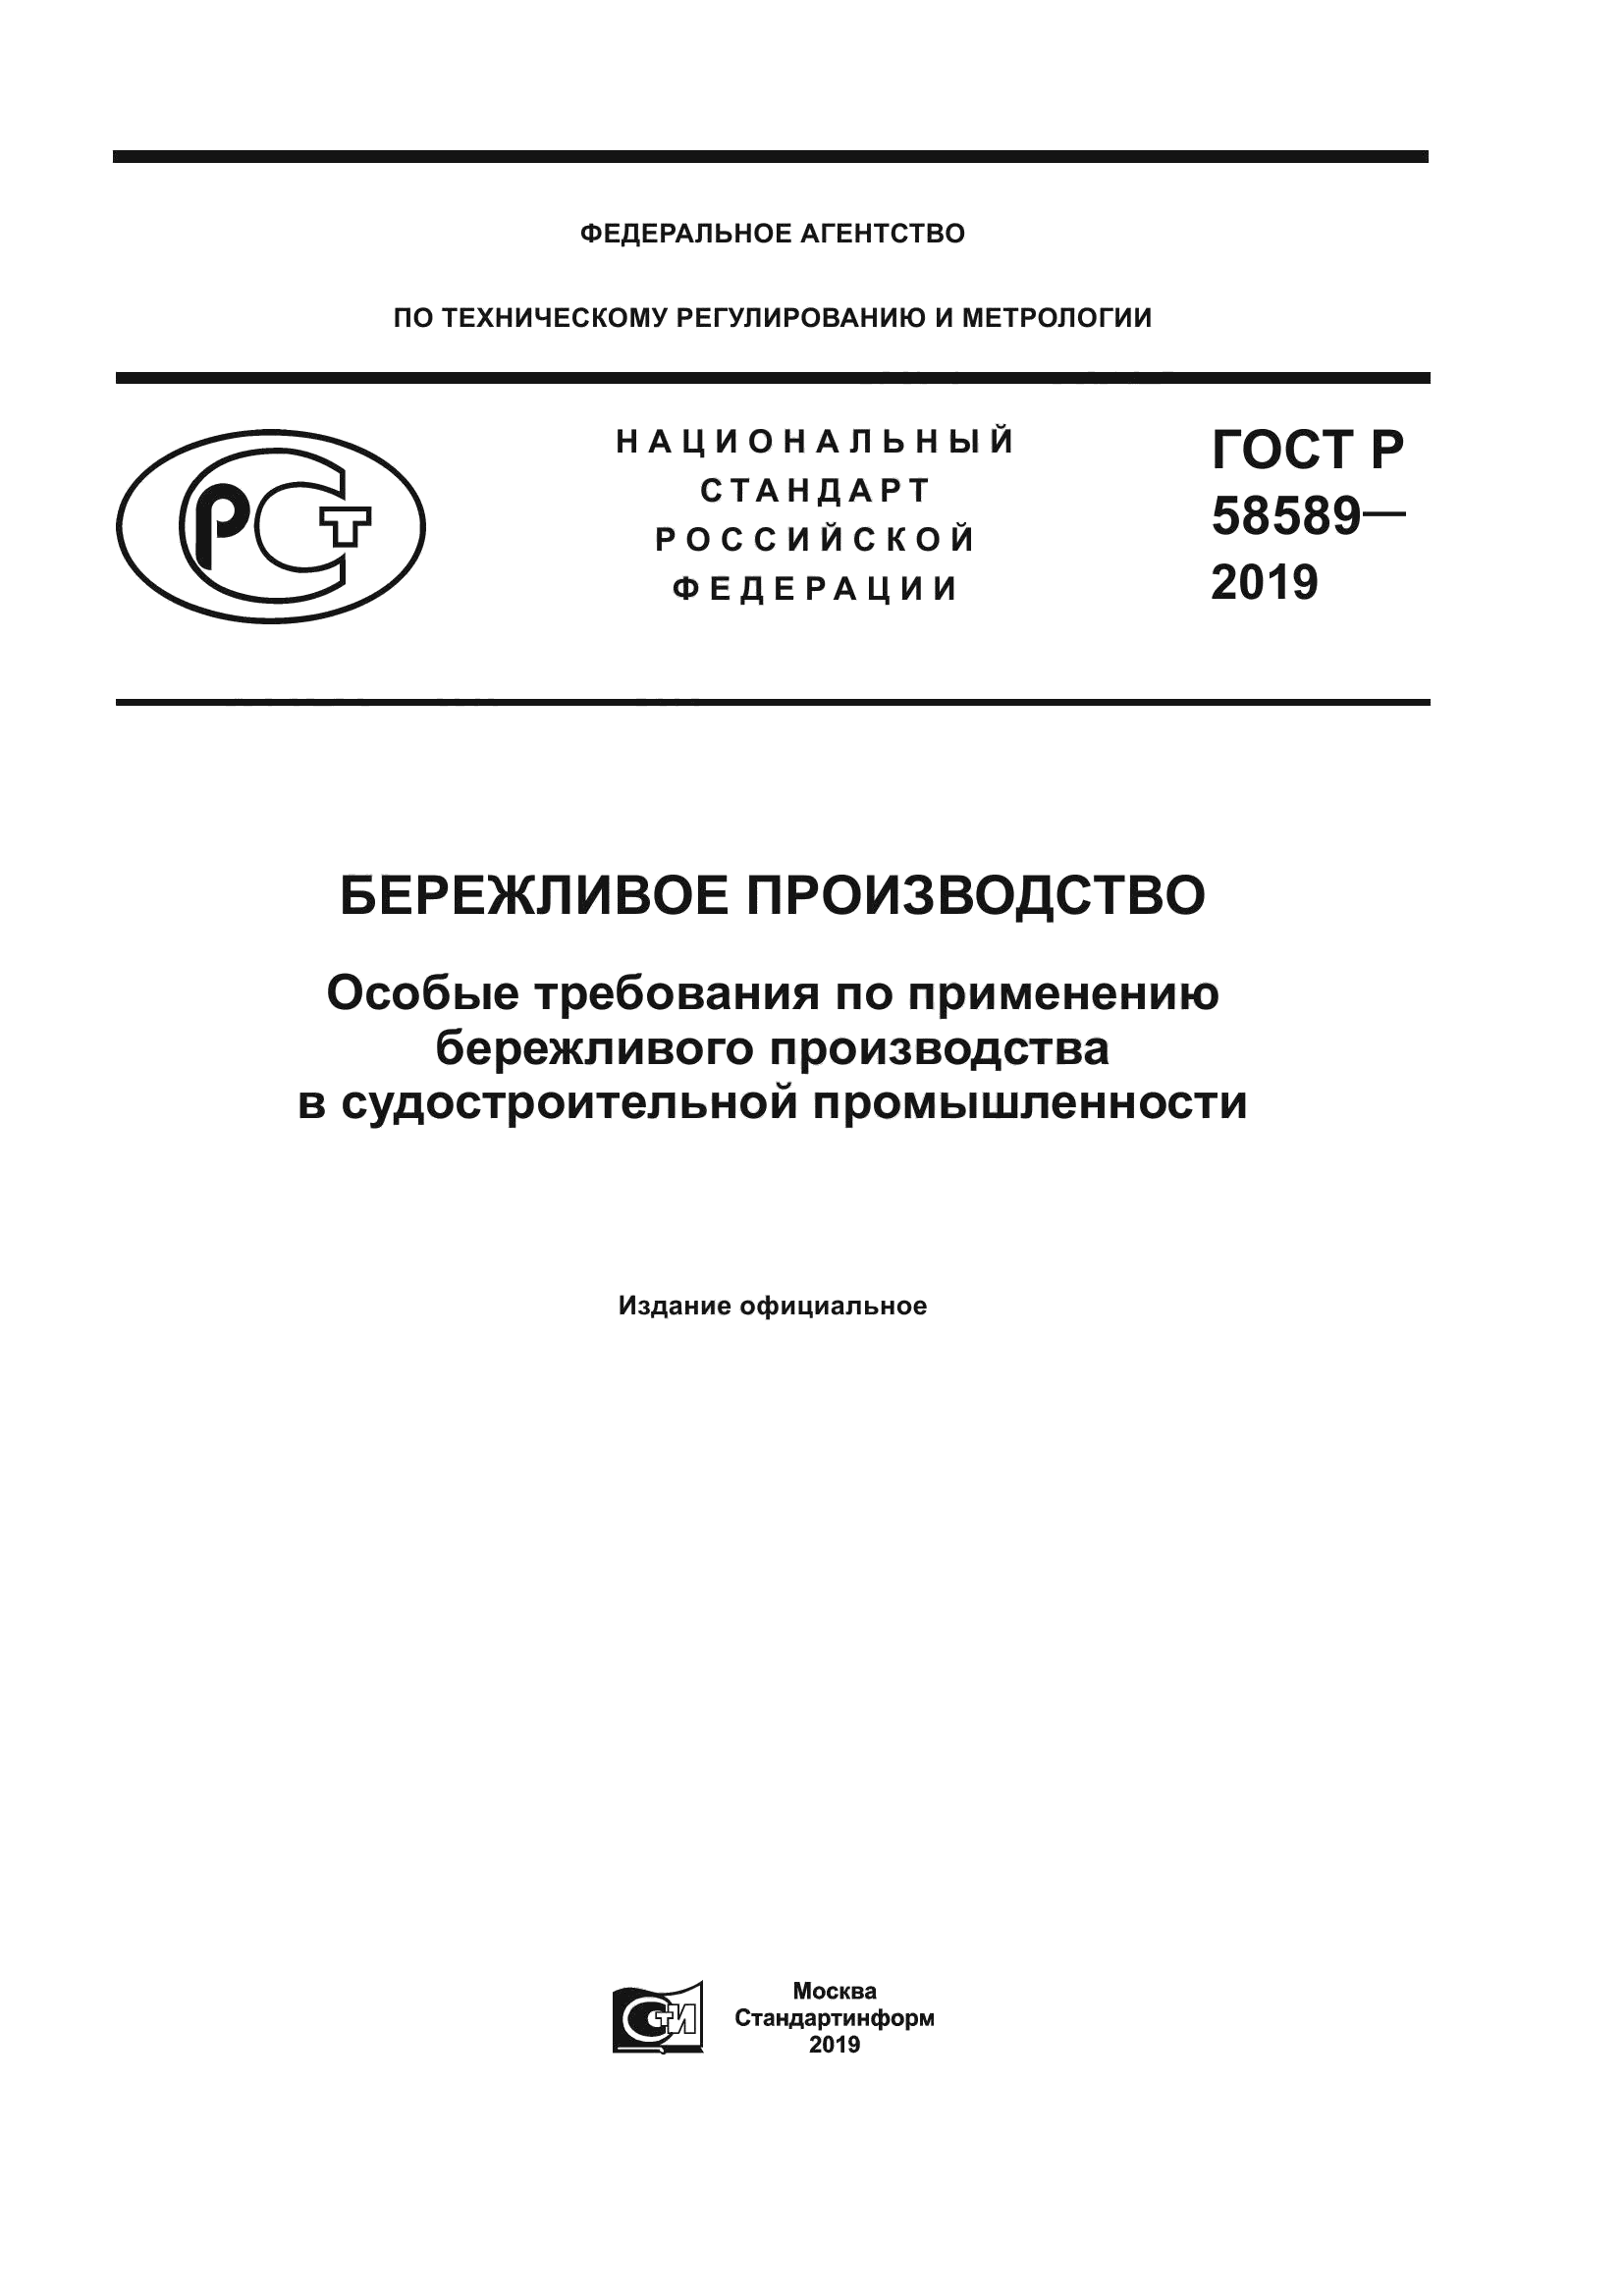 ГОСТ Р 58589-2019